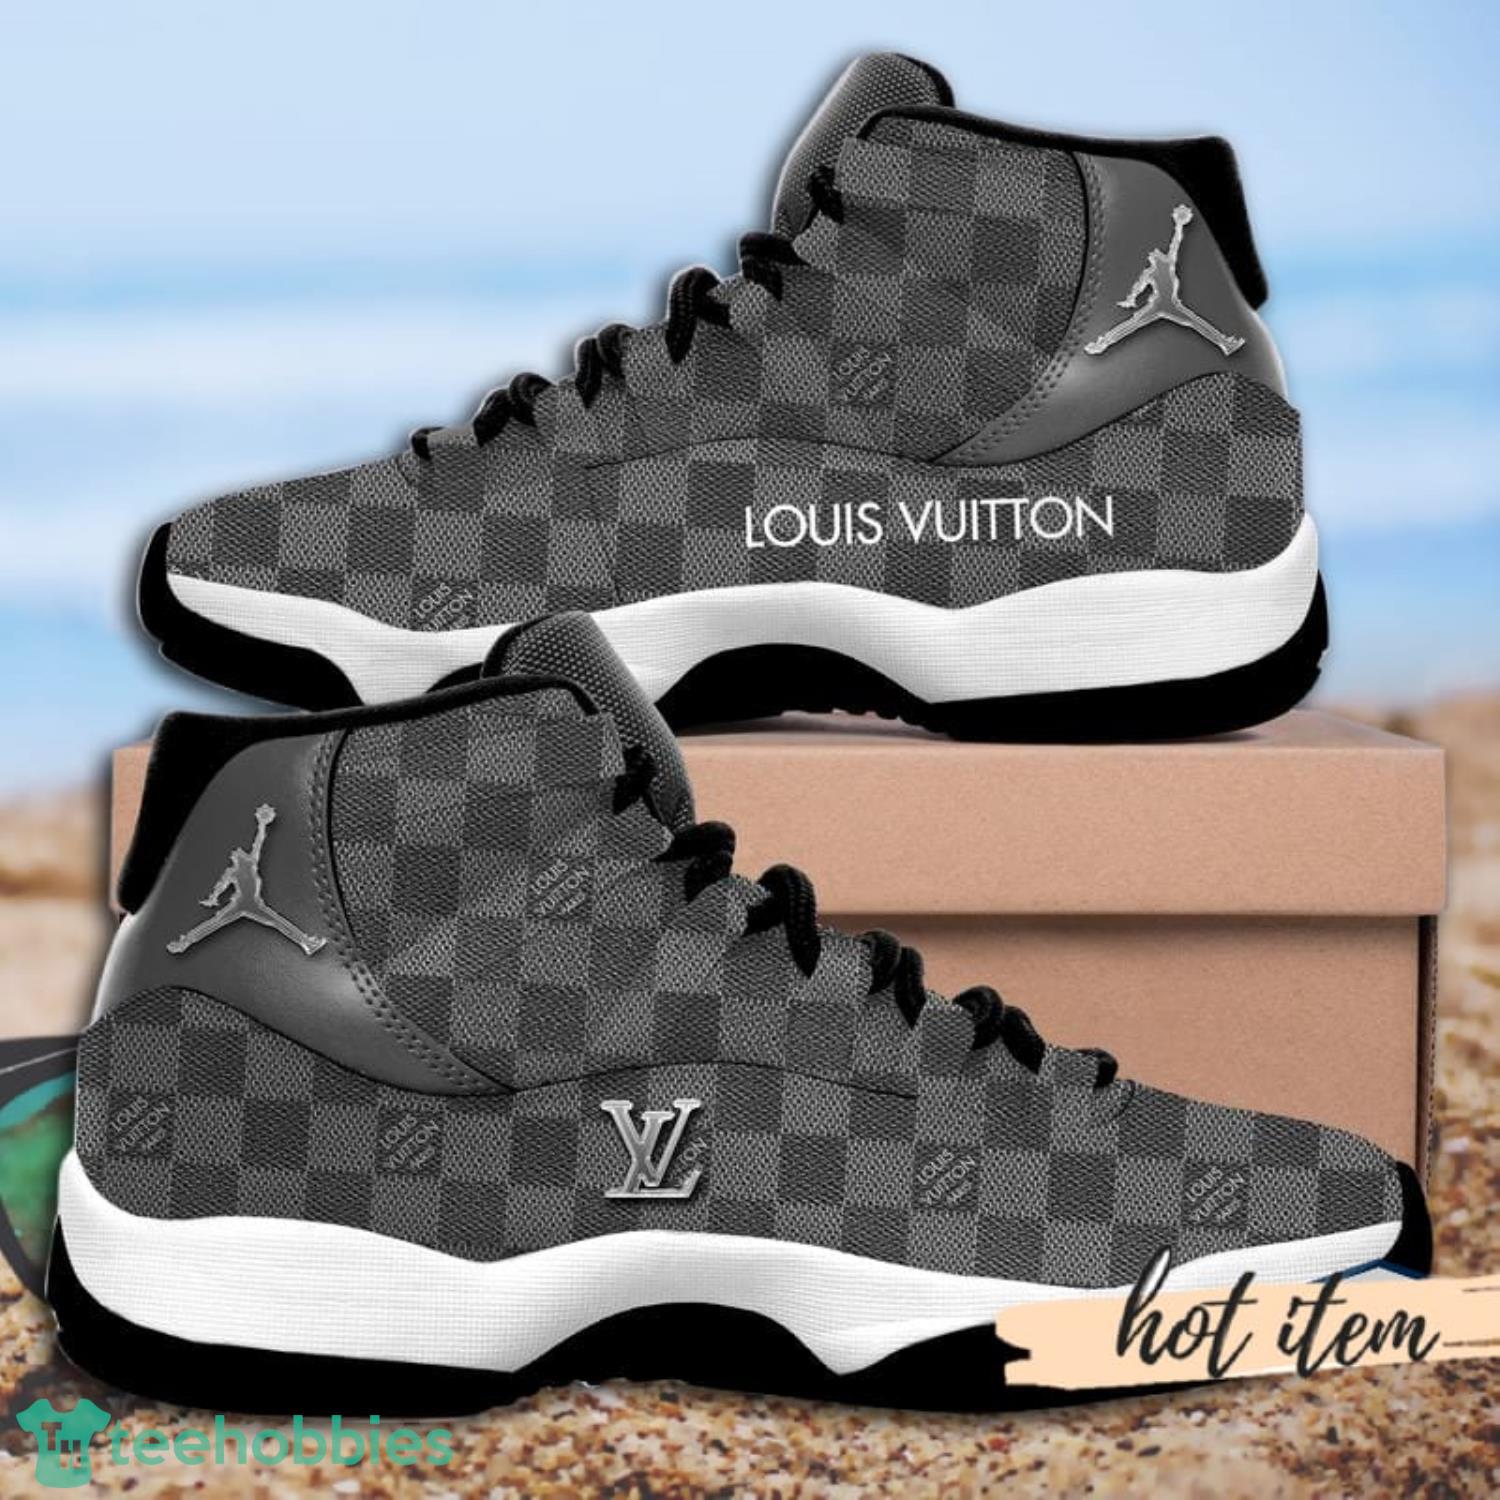 Louis Vuitton Grey Style Air Jordan 11 Shoes - Banantees